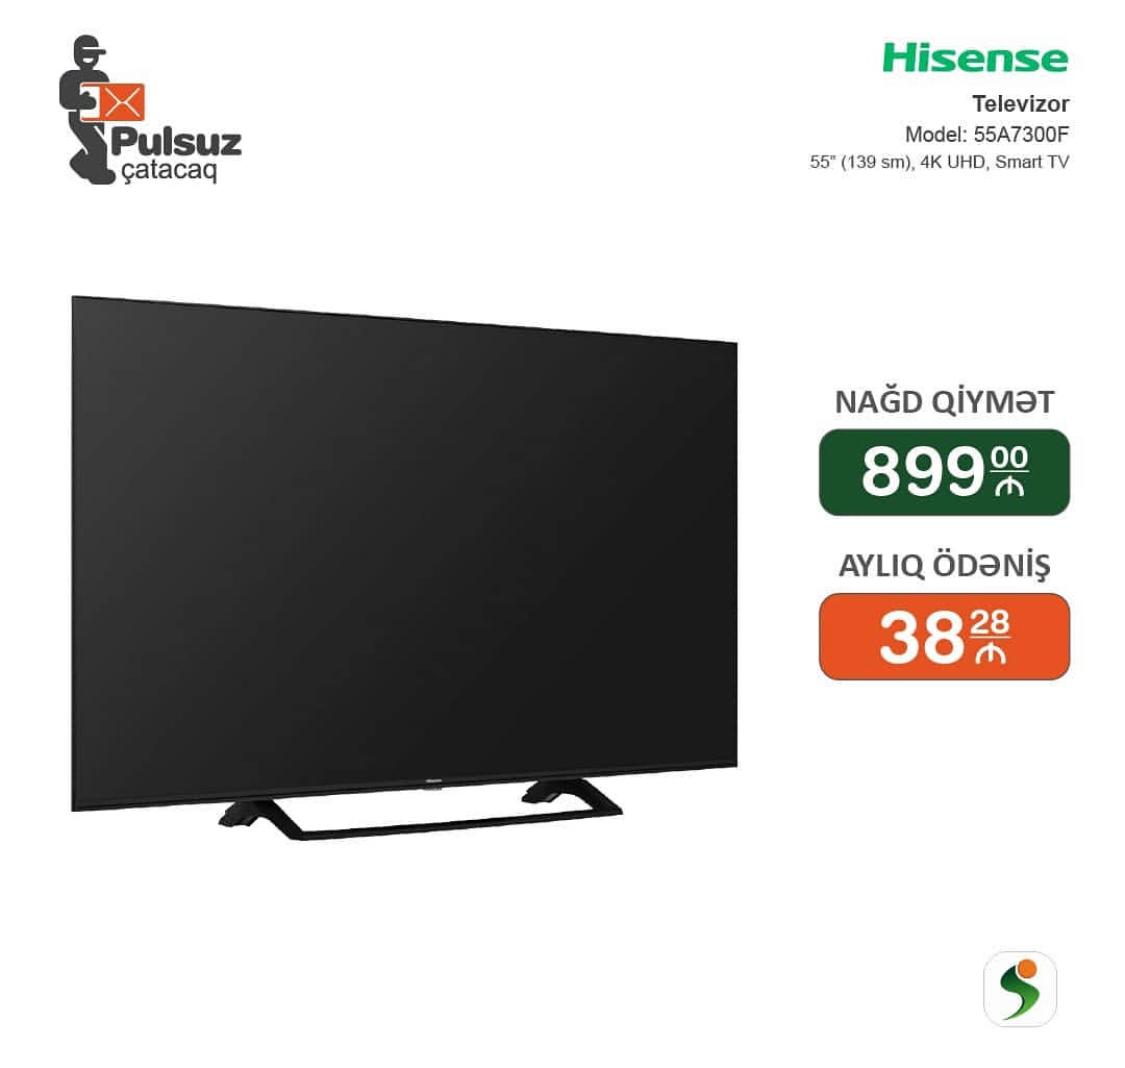 Hisense Tv 139 Ekran 4K Smart İlkin Odenissiz Arayissiz